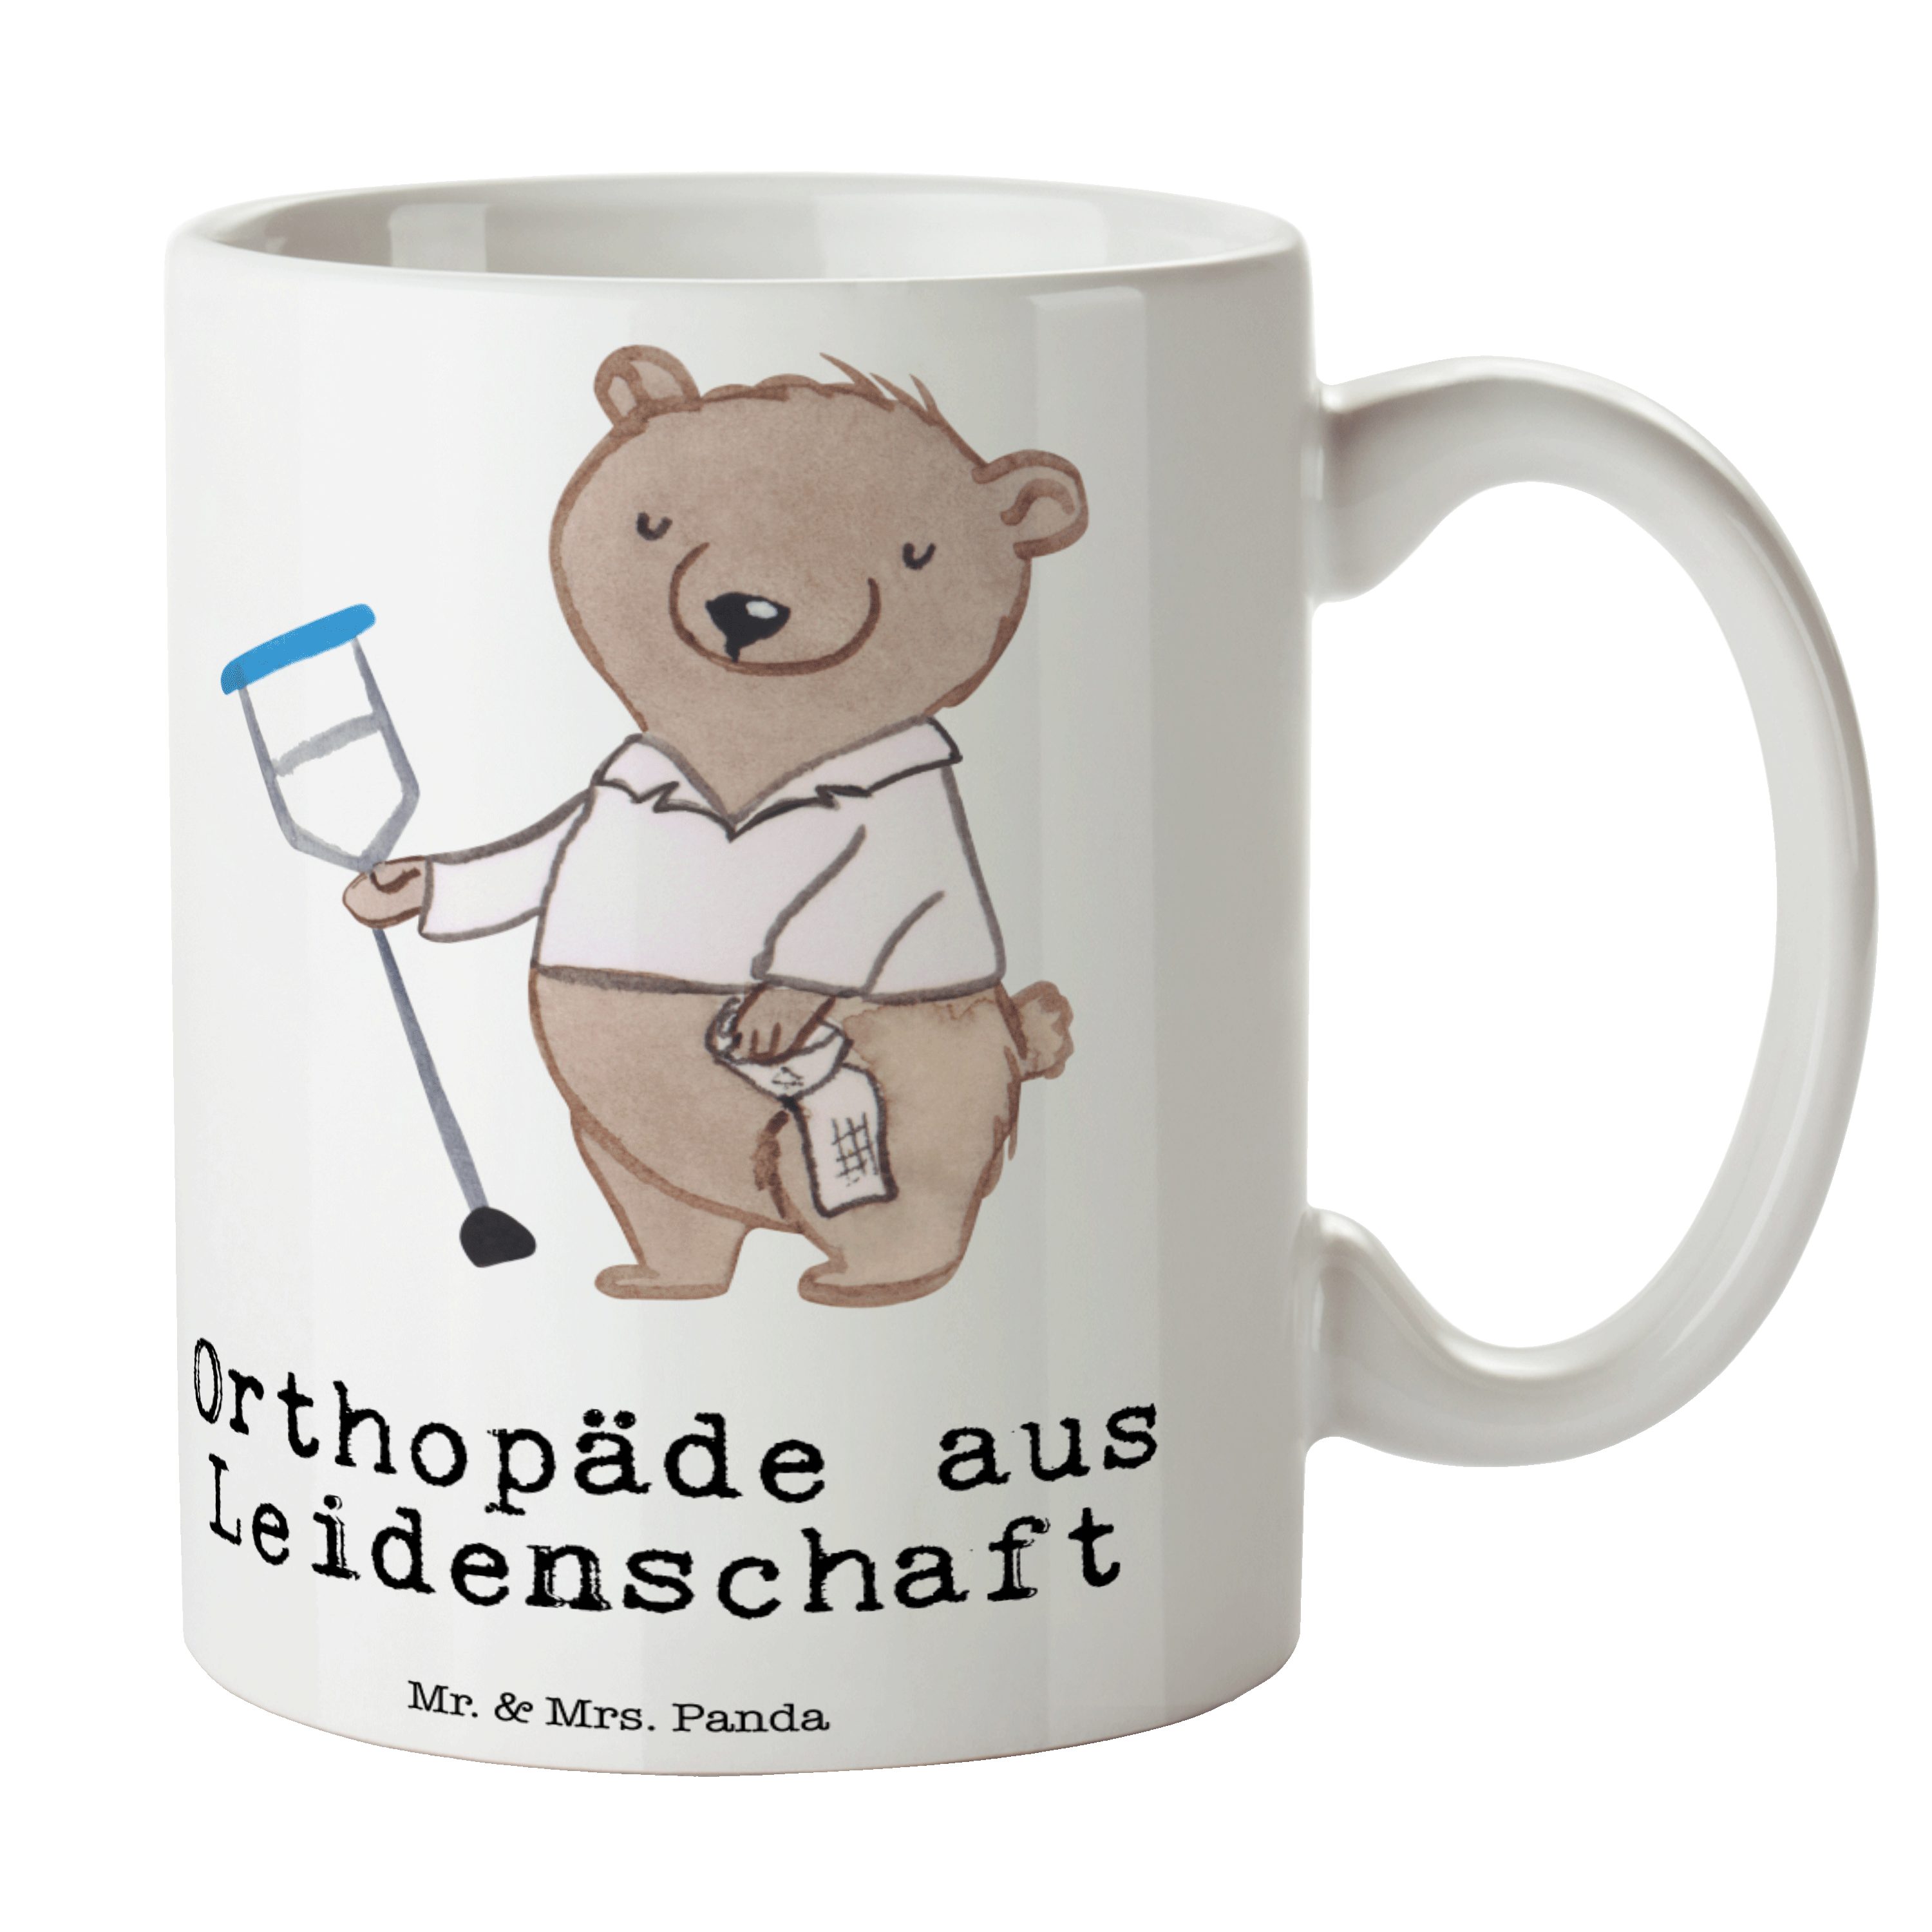 Mr. & Mrs. Panda Tasse Orthopäde aus Leidenschaft - Weiß - Geschenk, Teetasse, Kaffeetasse, Keramik